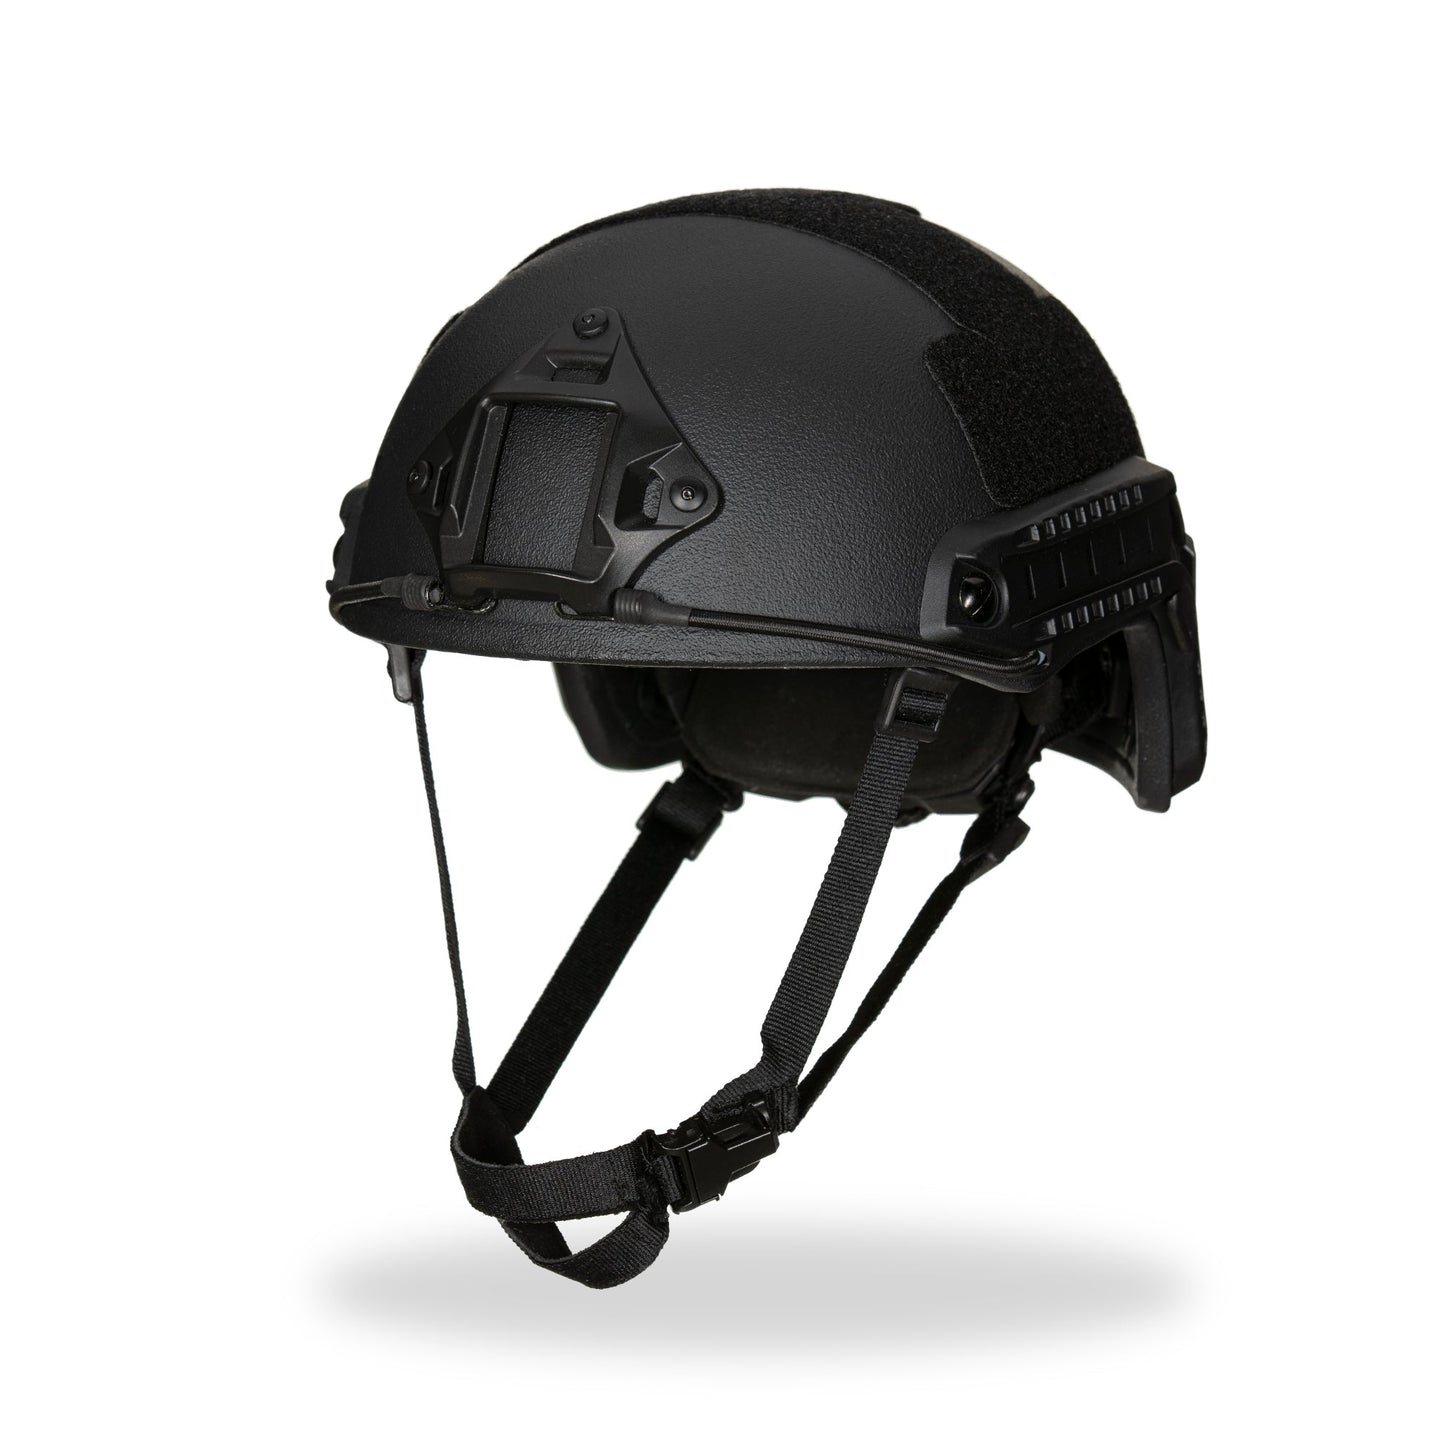 Ballisticarmorcopro.com High Cut III-A Balistic Helmet w/ Side Rails & NVG